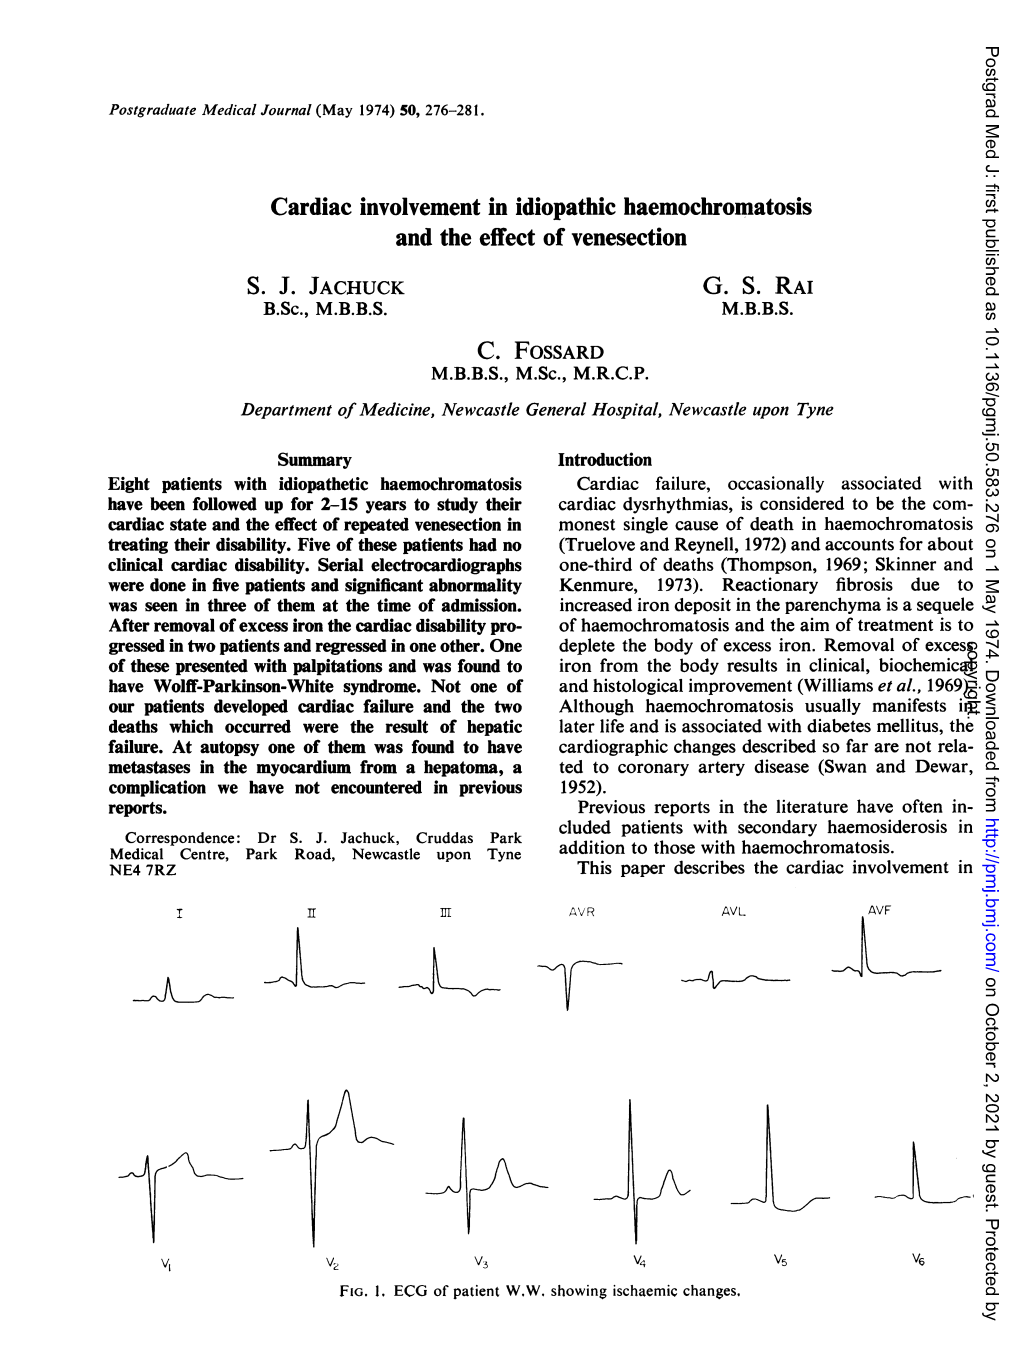 Cardiac Involvement in Idiopathic Haemochromatosis and the Effect of Venesection S. J. JACHUCK G. S. RAI M